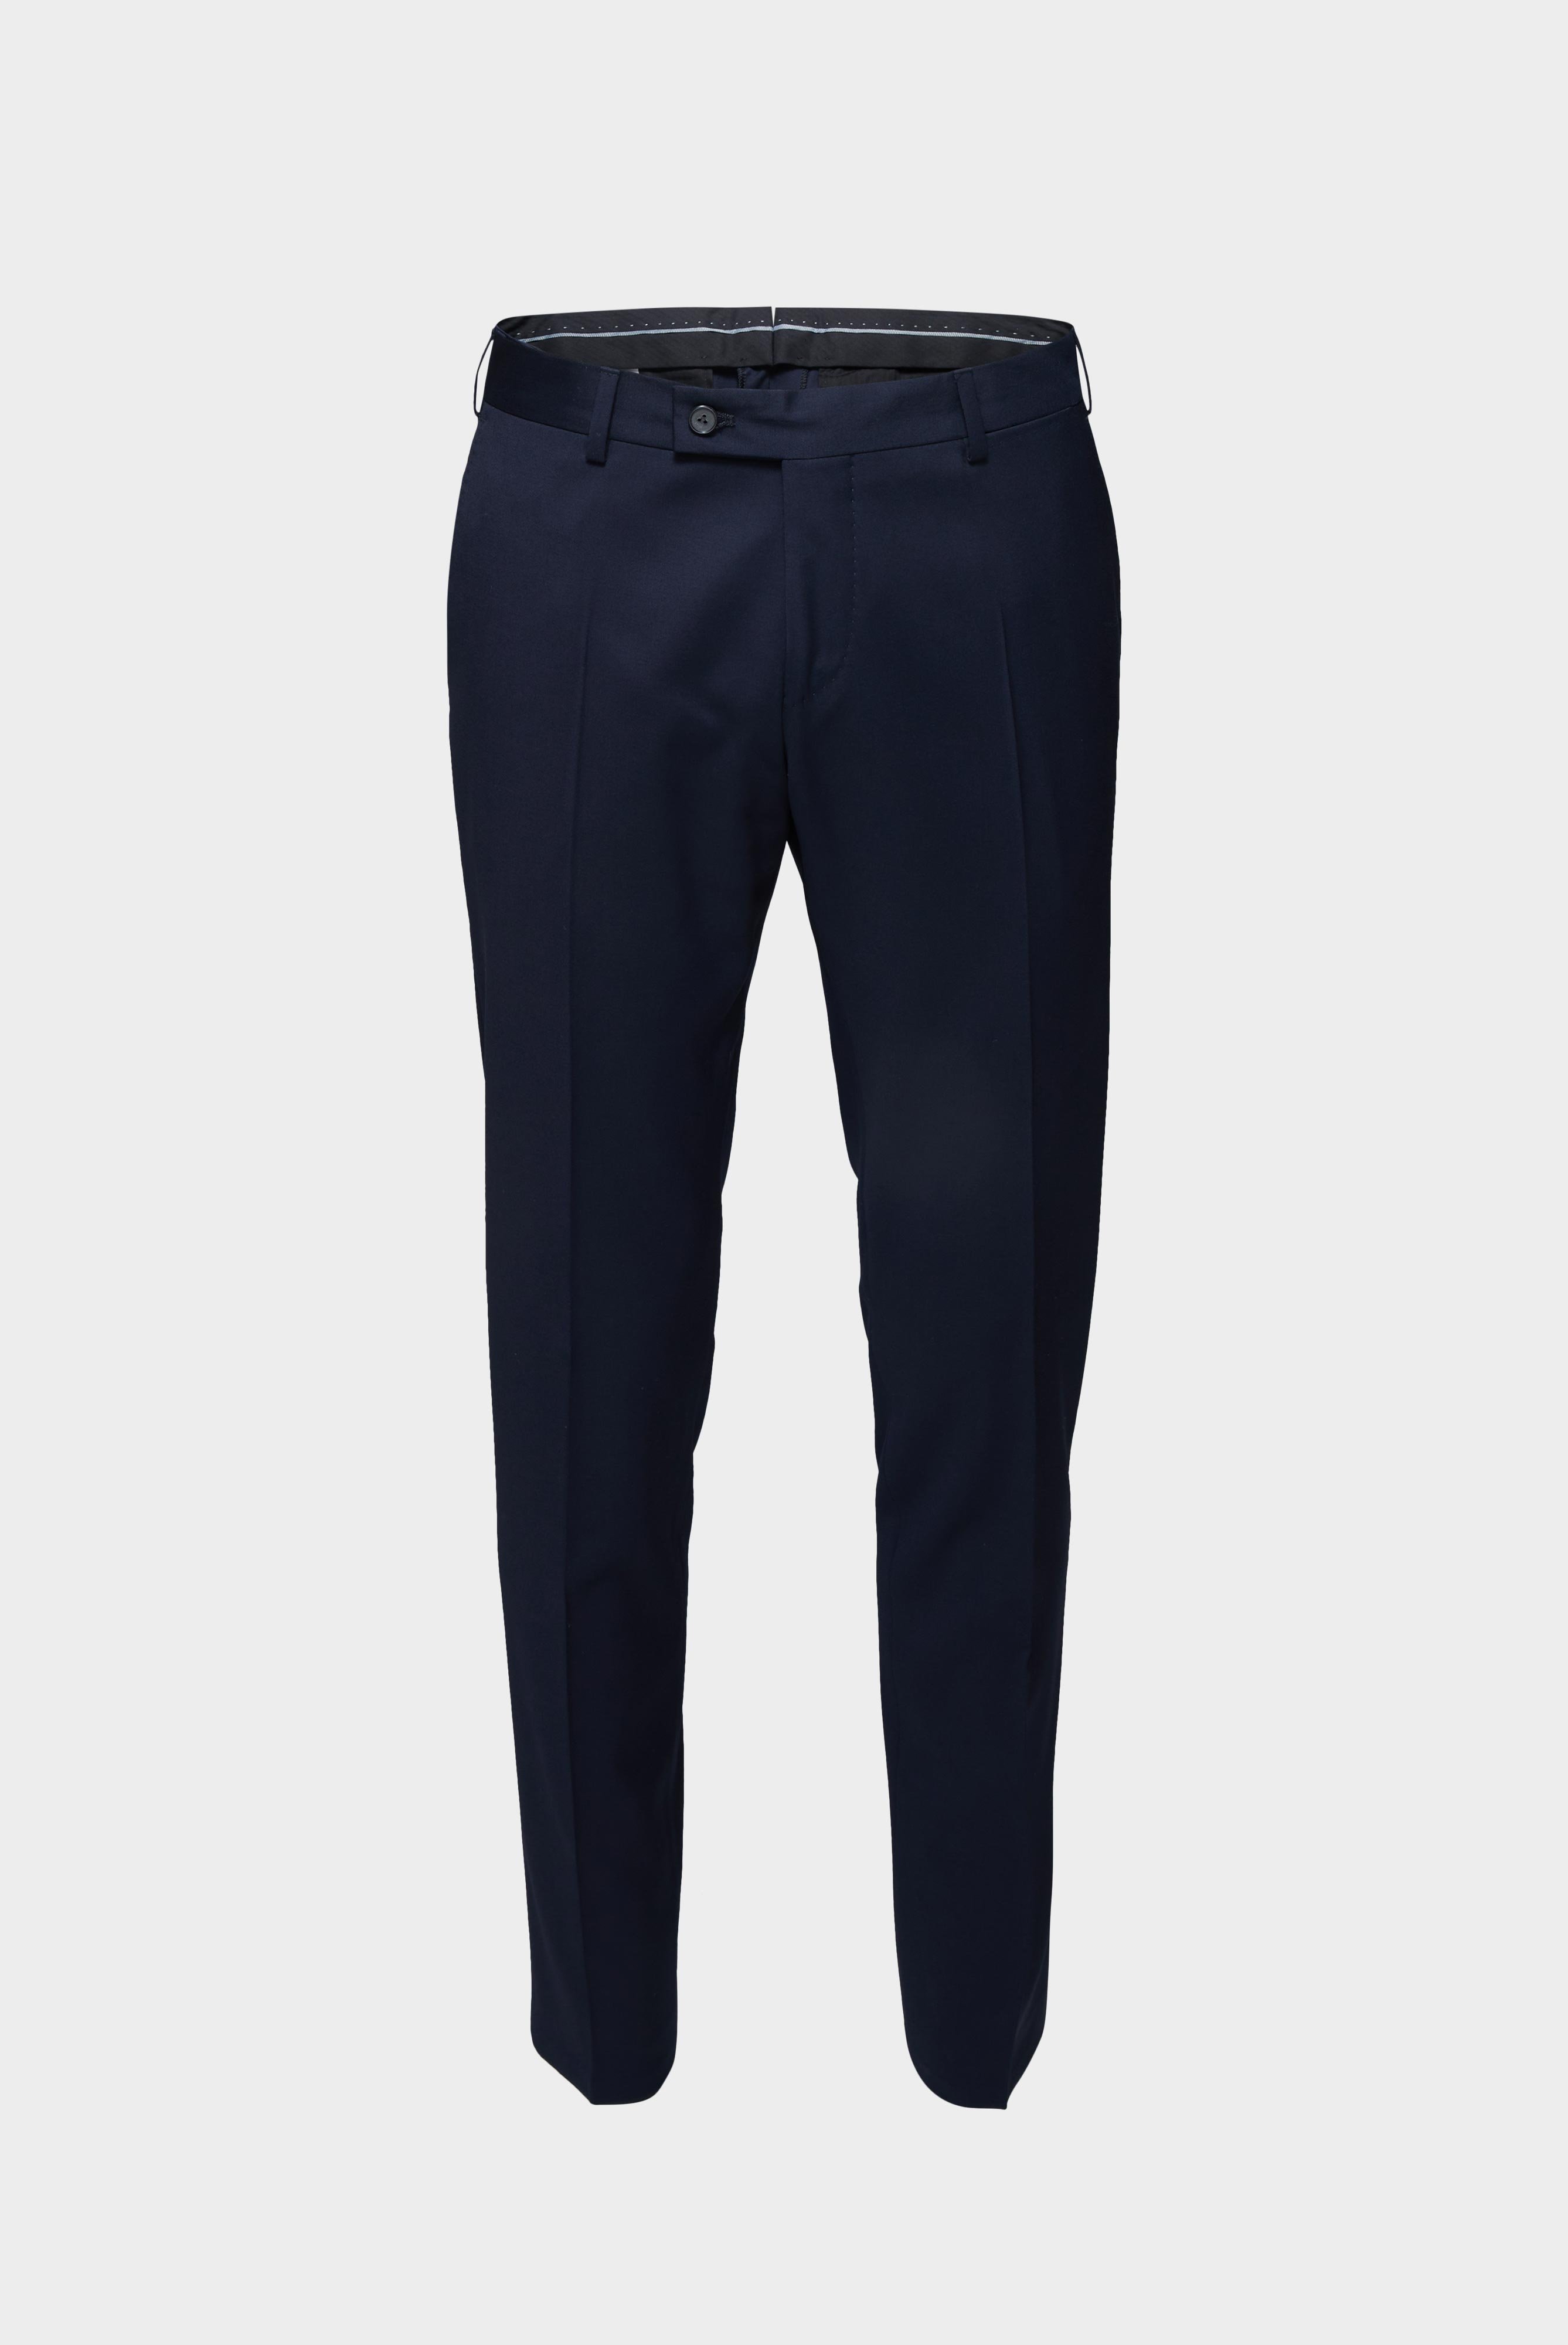 Jeans & Hosen+Hose aus Wolle Slim Fit+20.7880.16.H01010.780.31